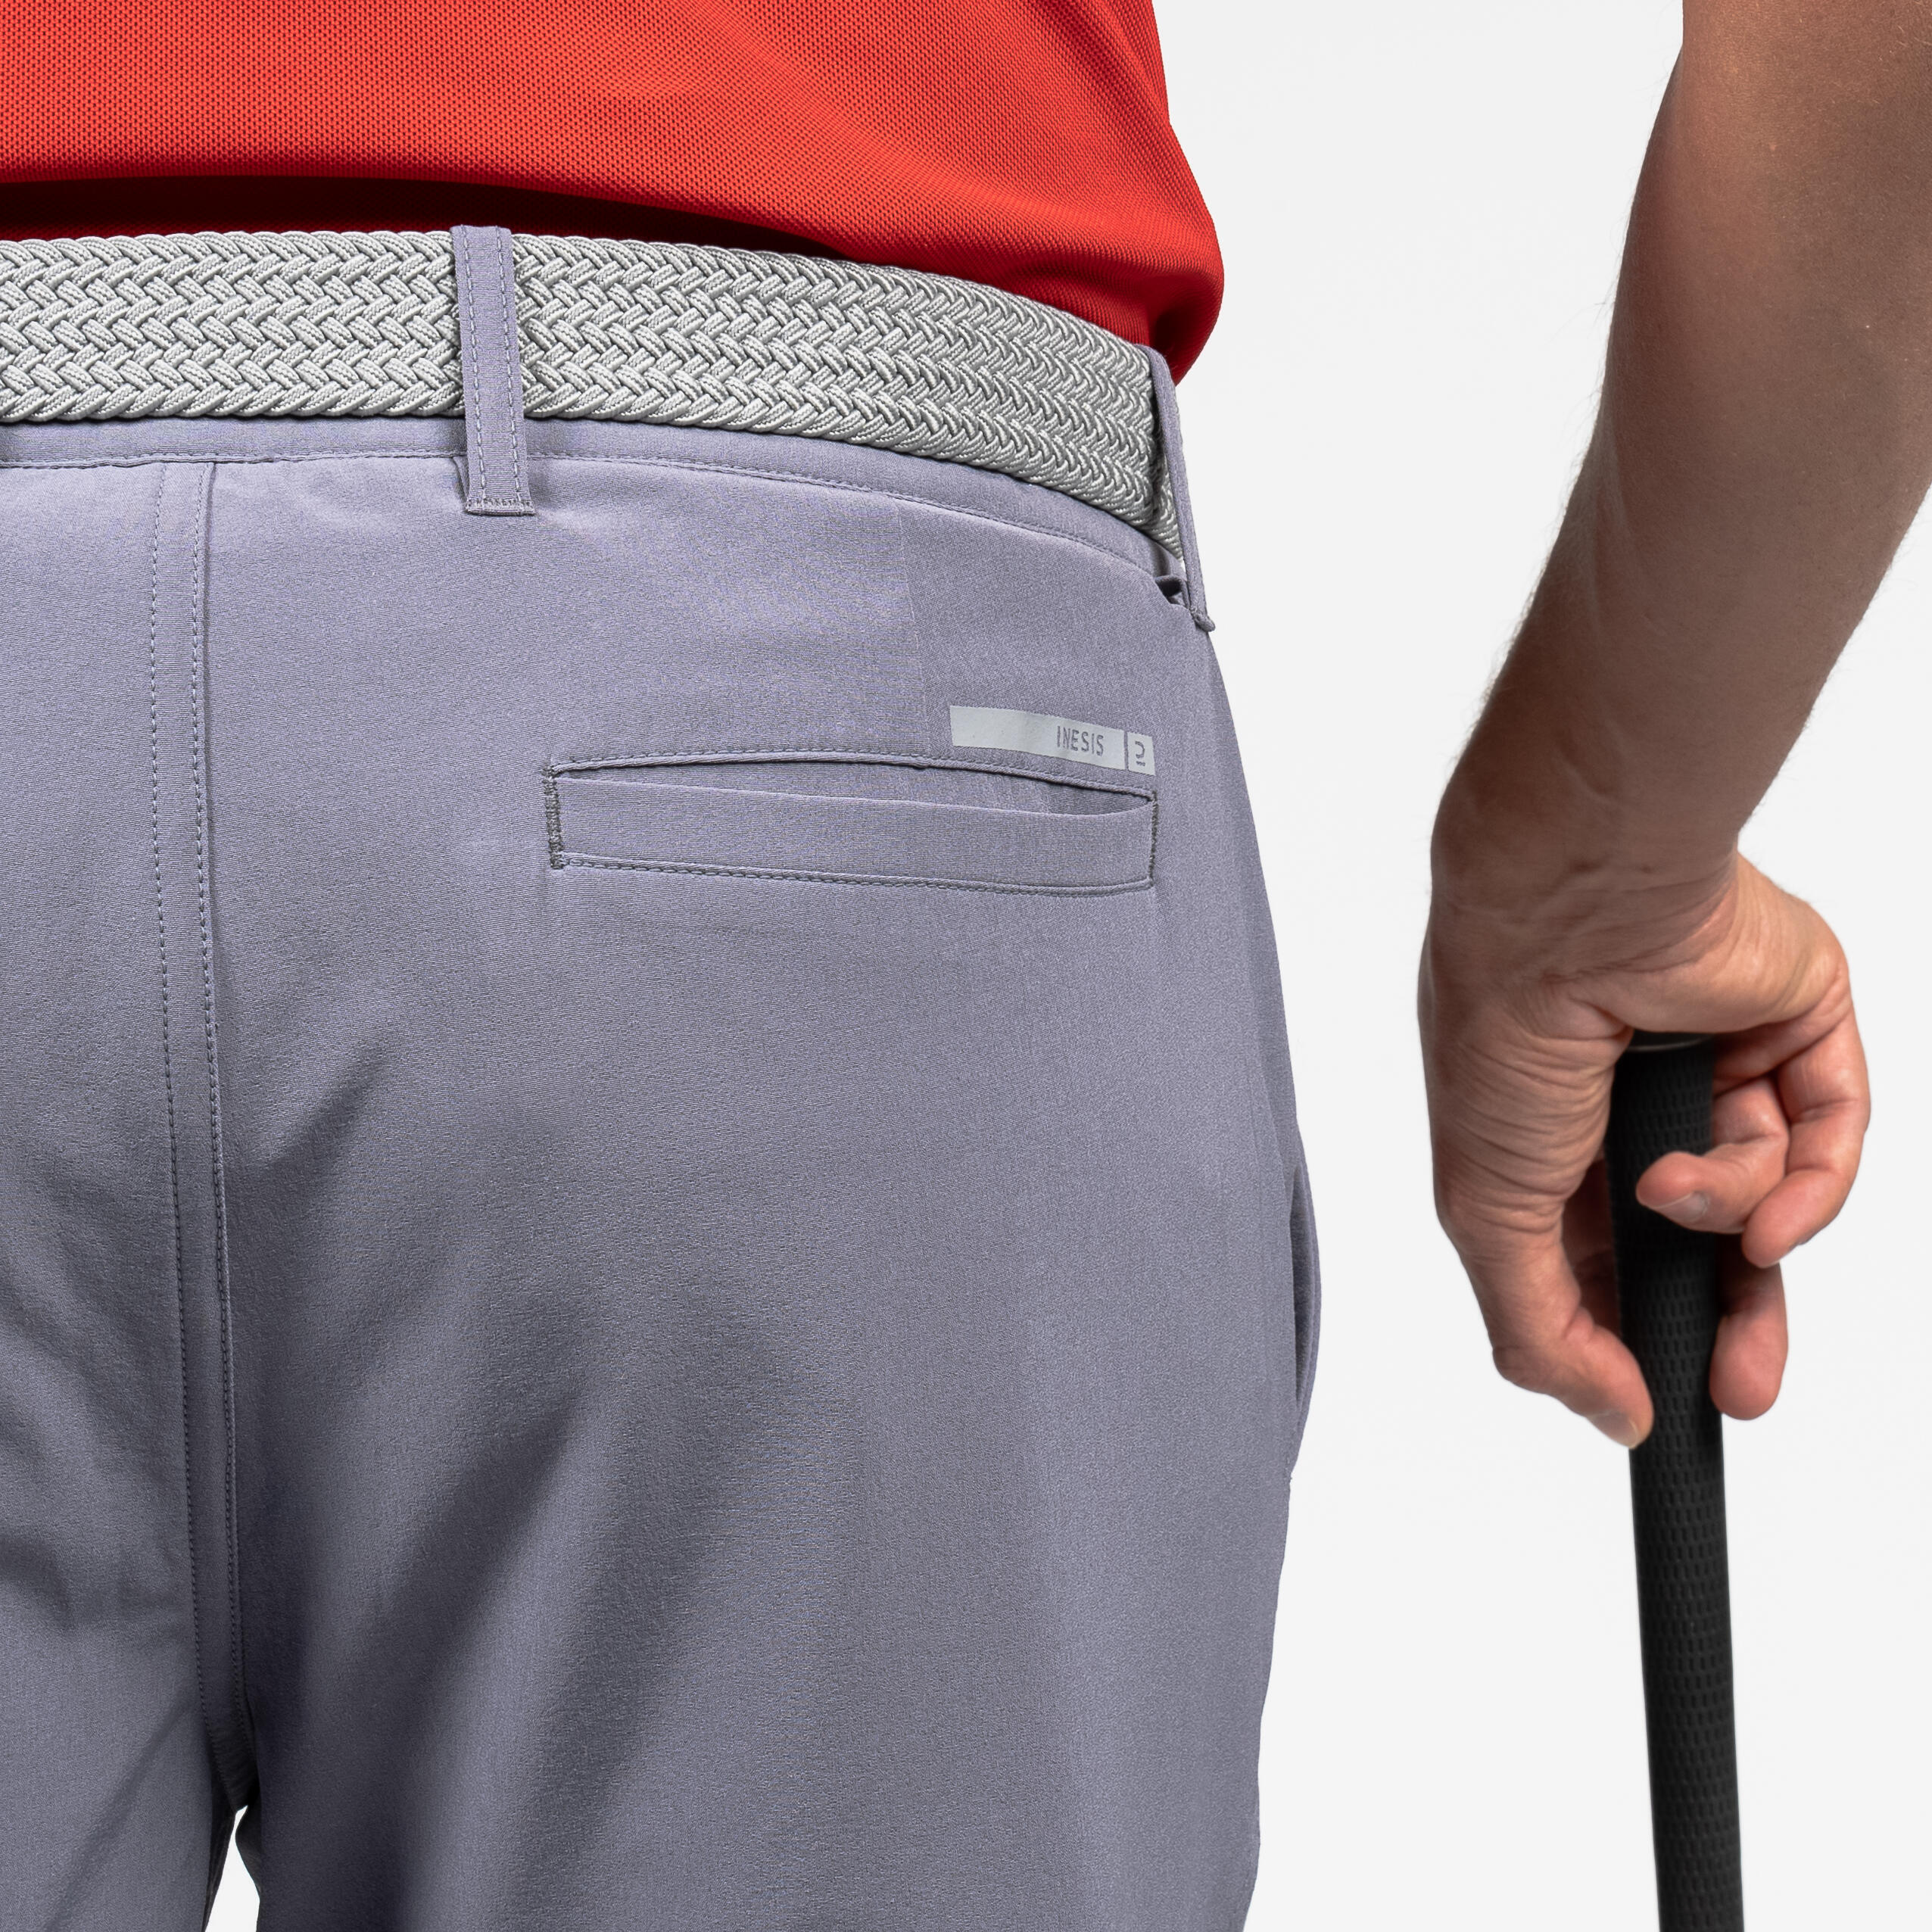 Men's golf trousers - WW 500 grey 4/4